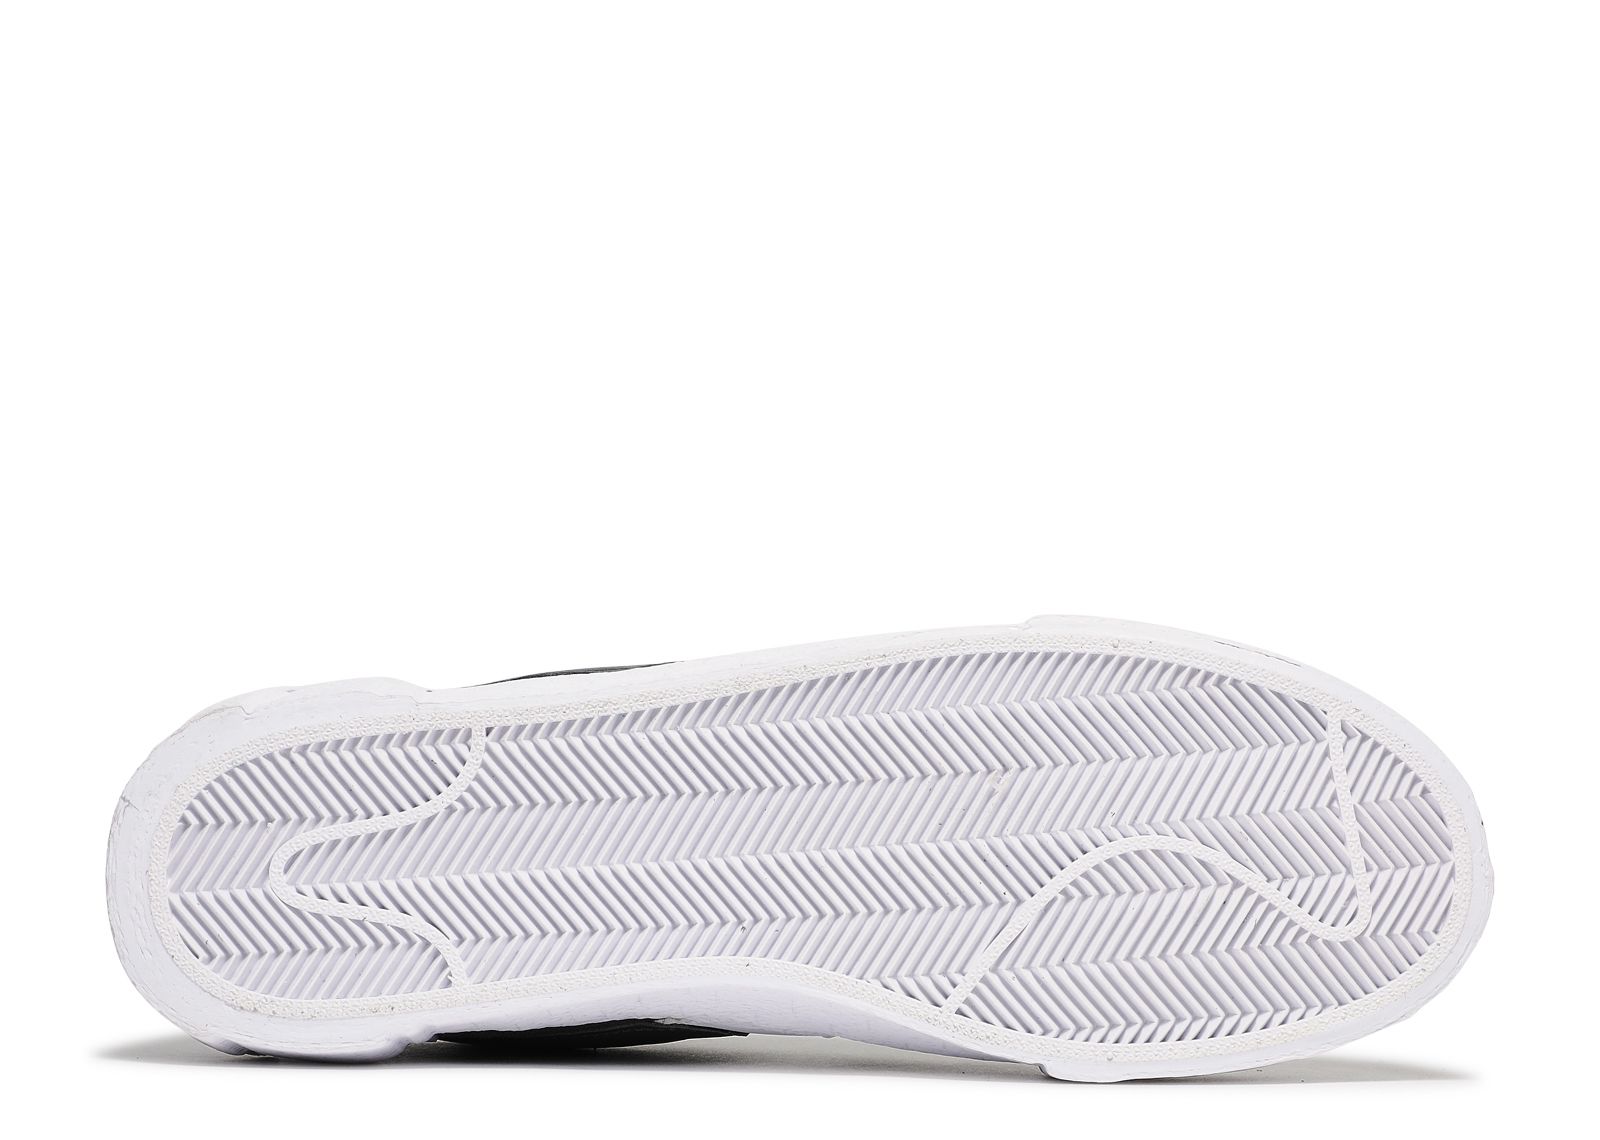 Sacai X Blazer Low 'Iron Grey' - Nike - DD1877 002 - iron grey/white 